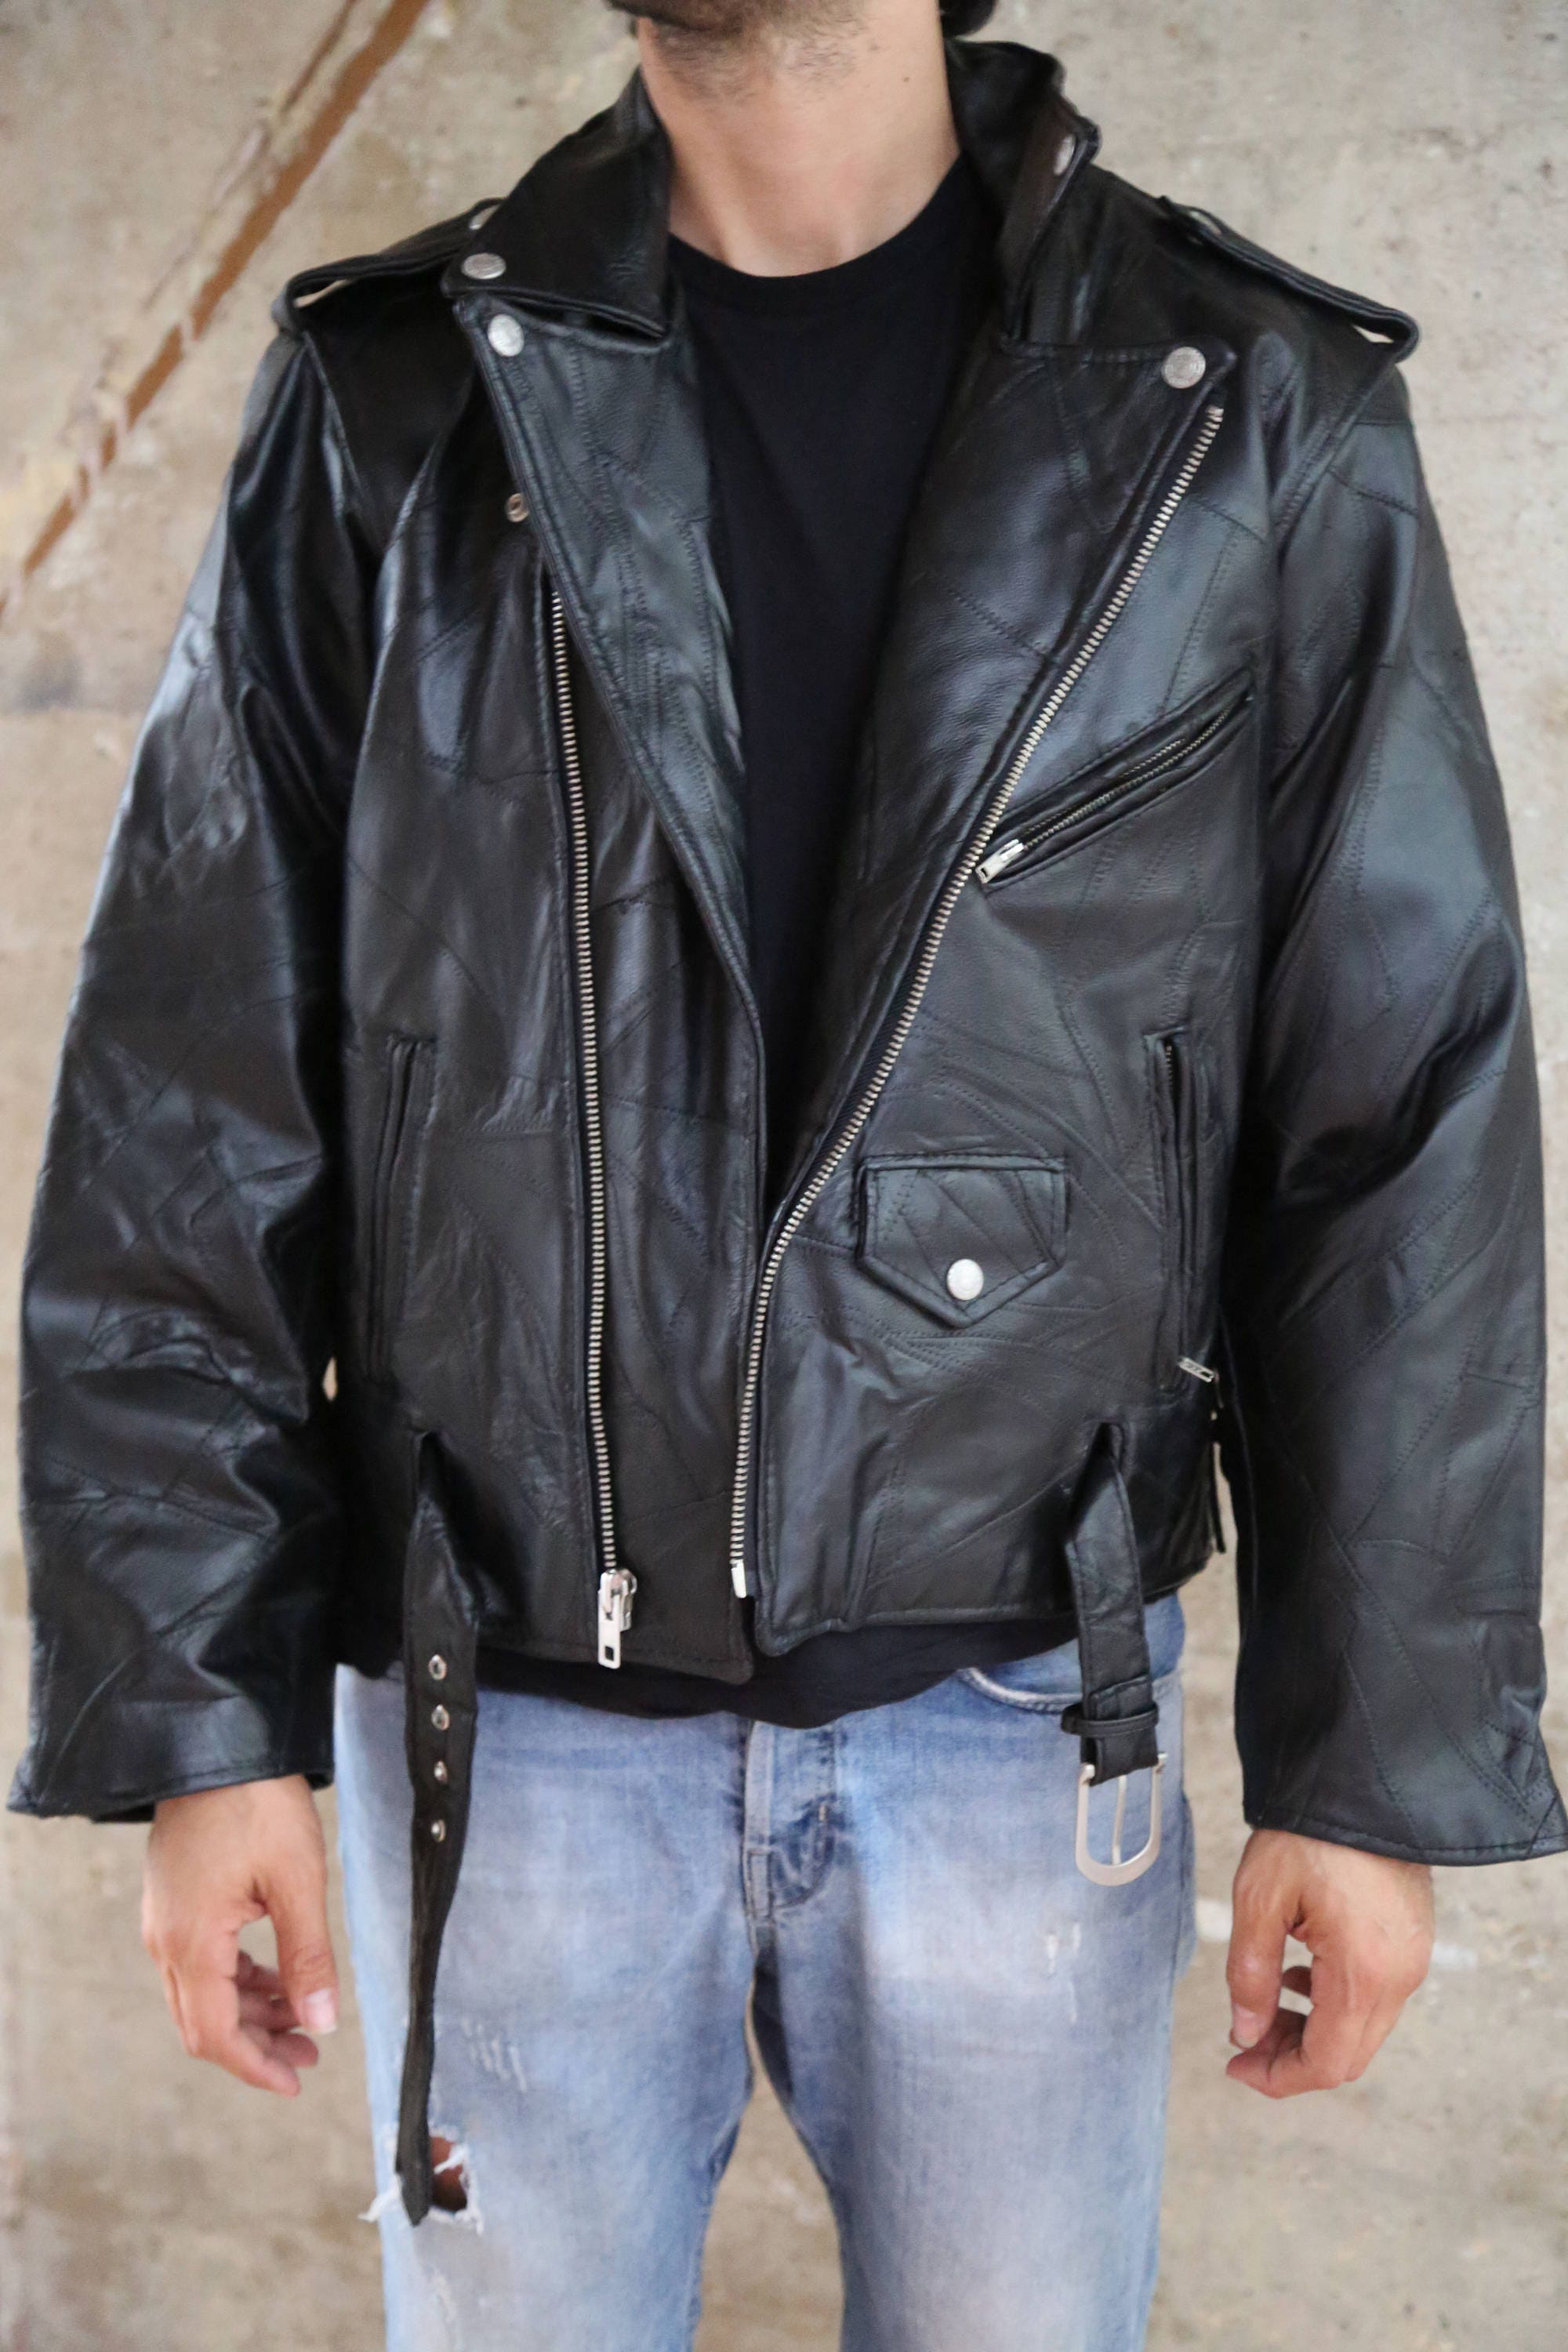 Mens Harley Davidson motorcycle jacket Large